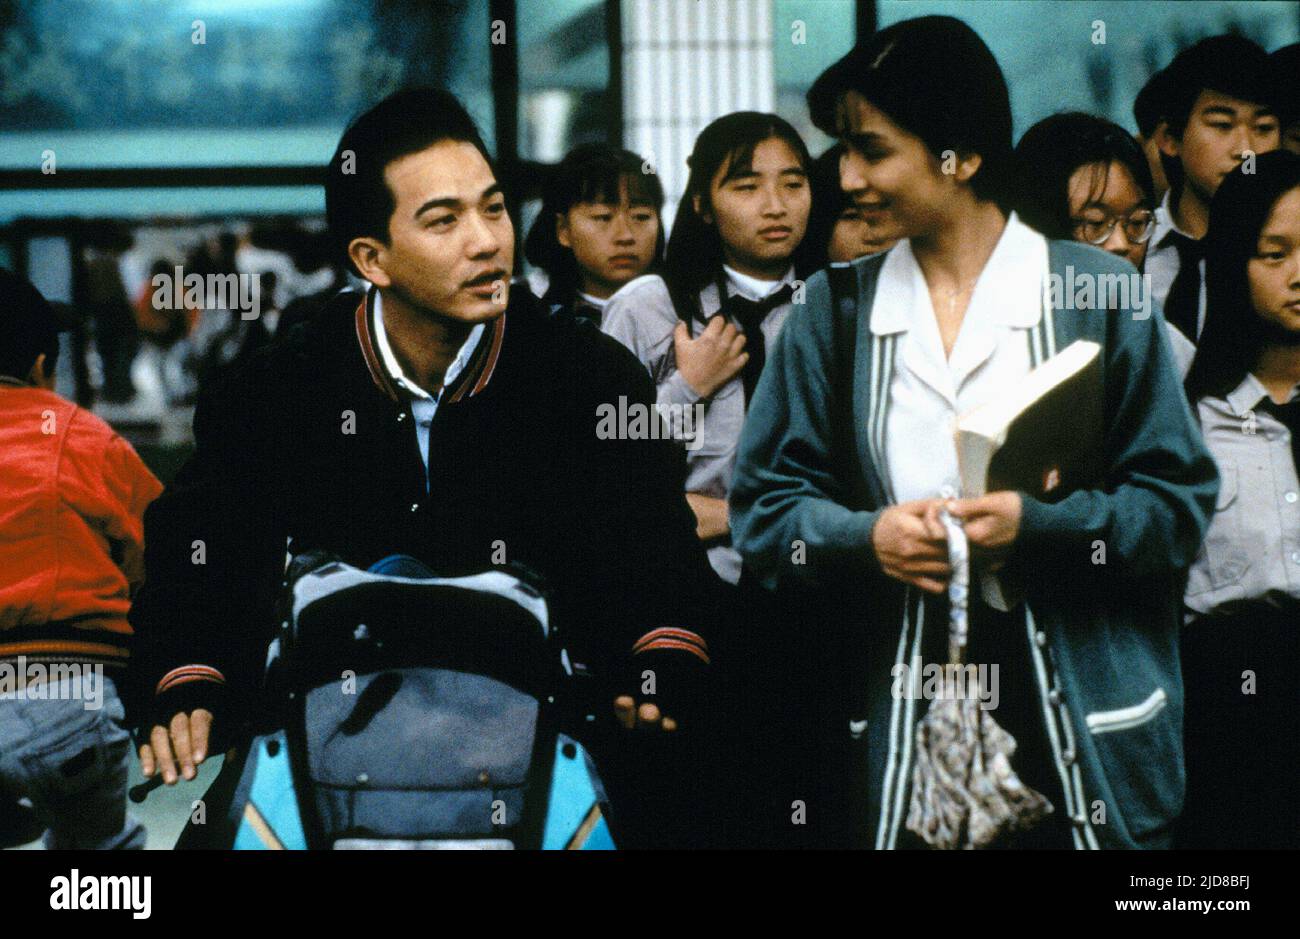 CHAN,YANG, mangiare bere uomo donna, 1994 Foto Stock